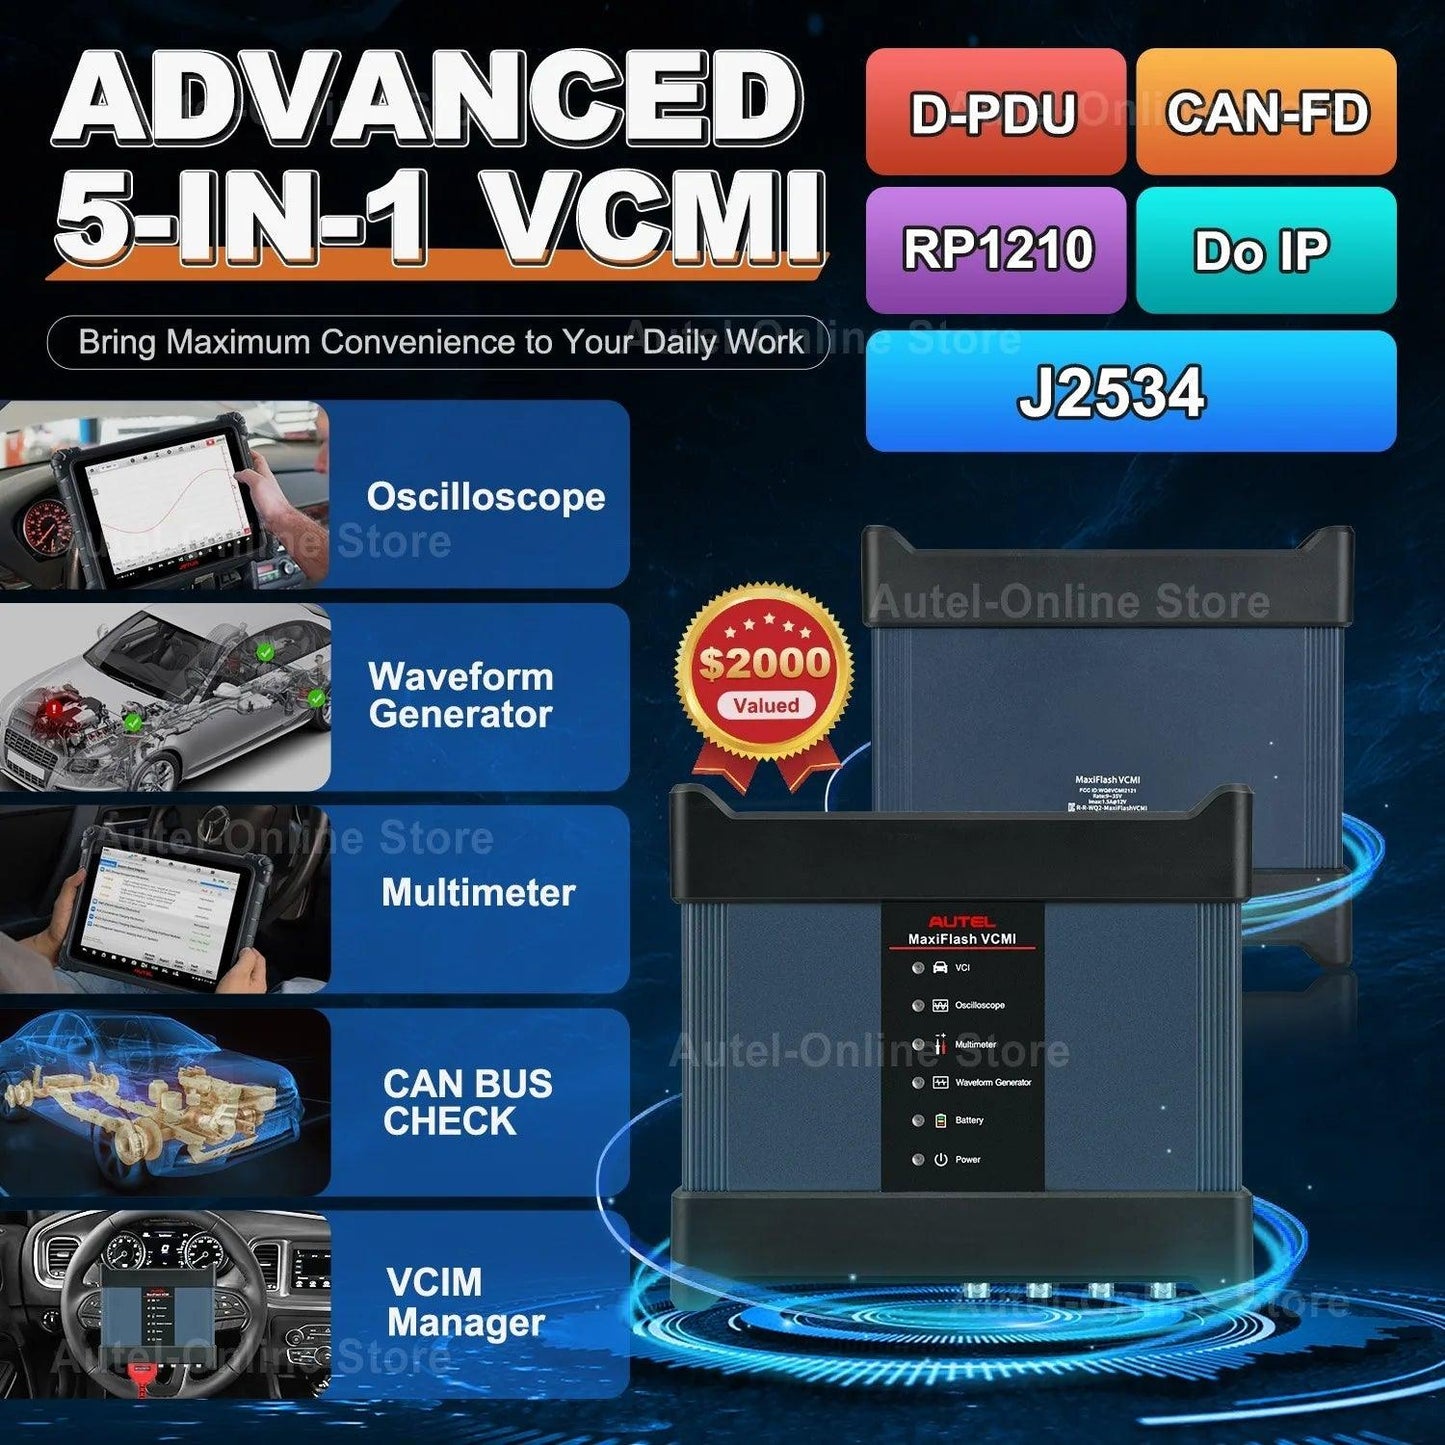 Autel MaxiFlash VCMI Vehicle Communication Measurement Interface, Built-in Oscilloscope, Waveform Generator, Multimeter, CAN FD - Dynamex